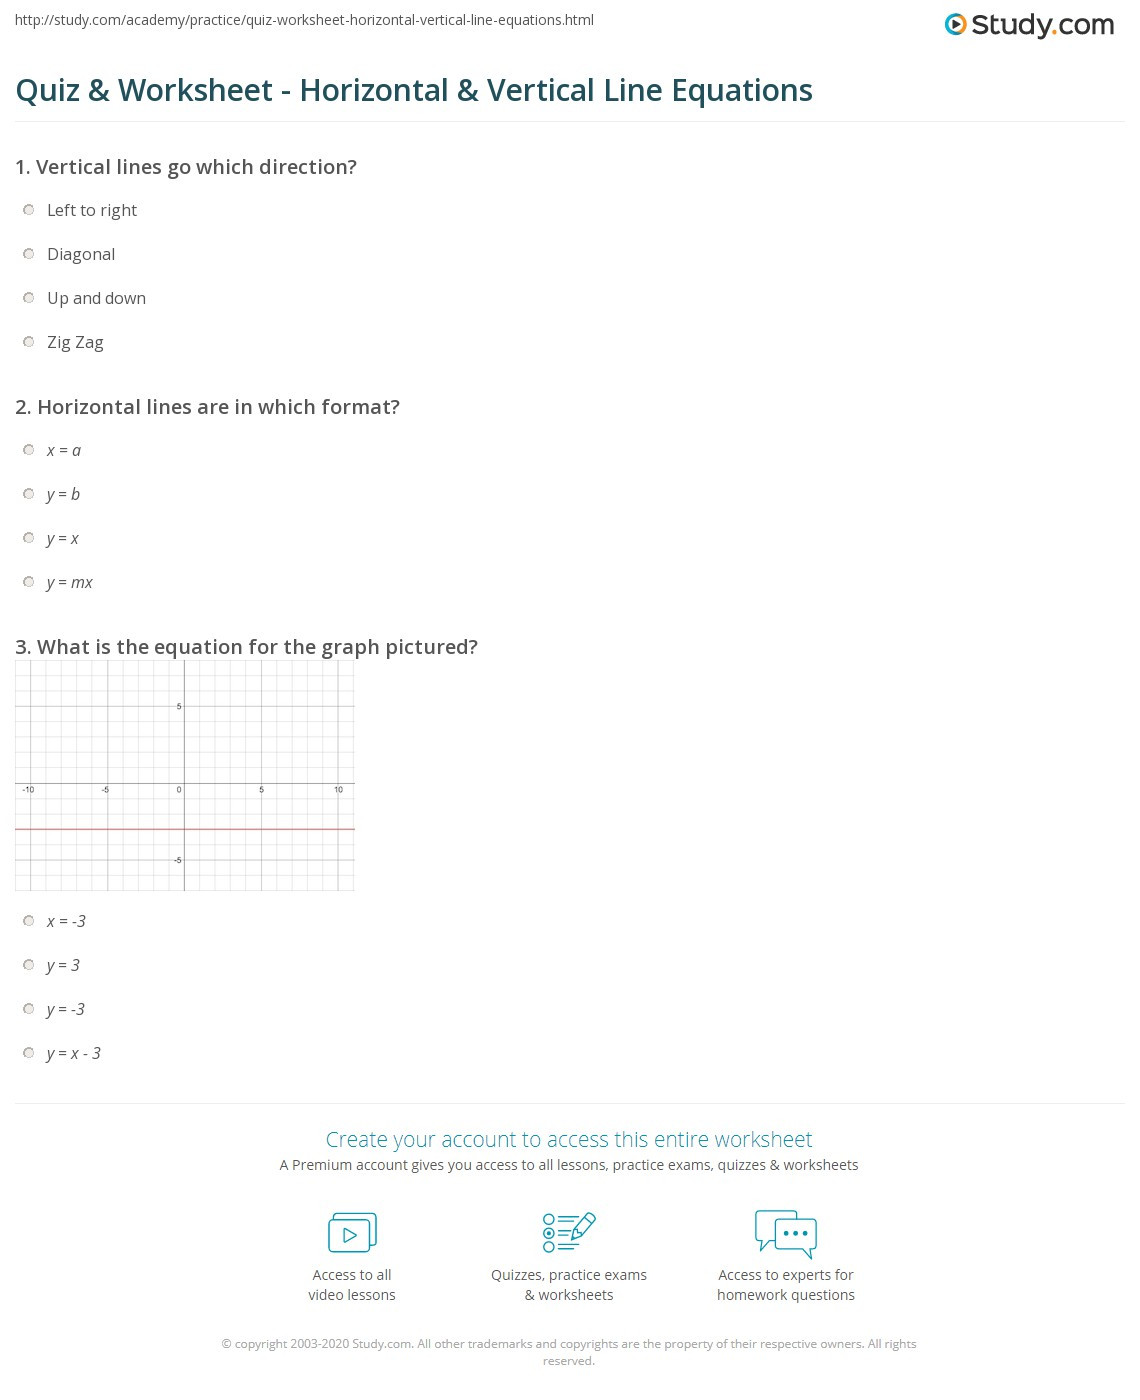 Horizontal and Vertical Lines Worksheet Quiz &amp; Worksheet Horizontal &amp; Vertical Line Equations